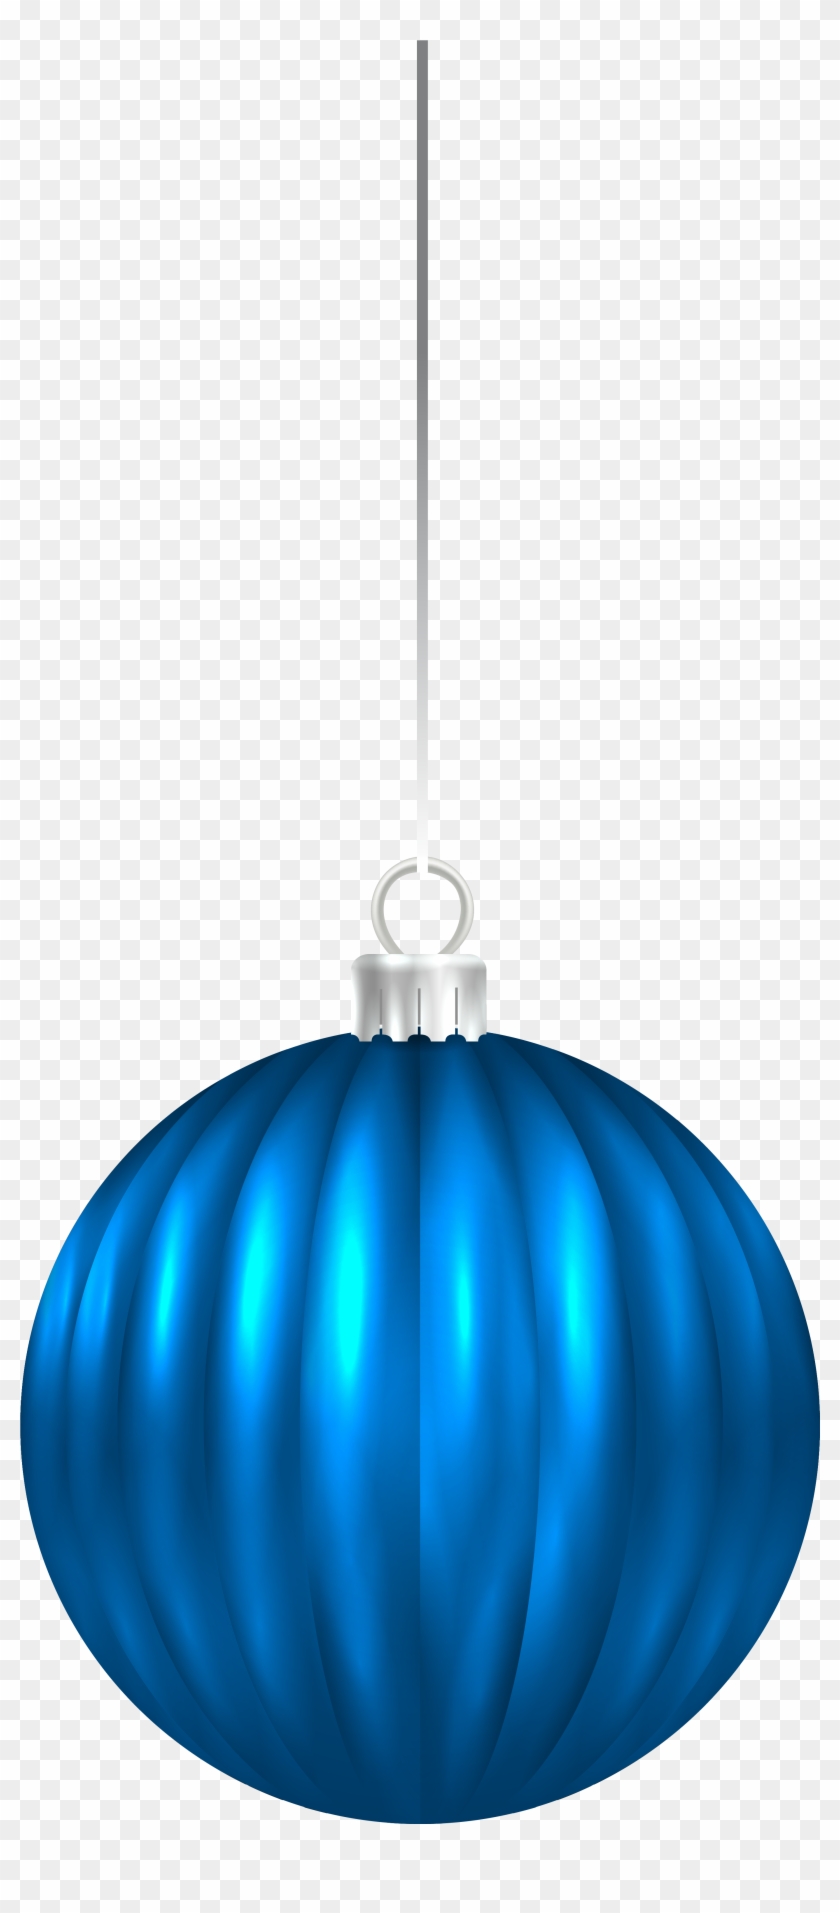 Christmas Ornaments Clipart Blue Christmas - Blue Christmas Ball Png #37470